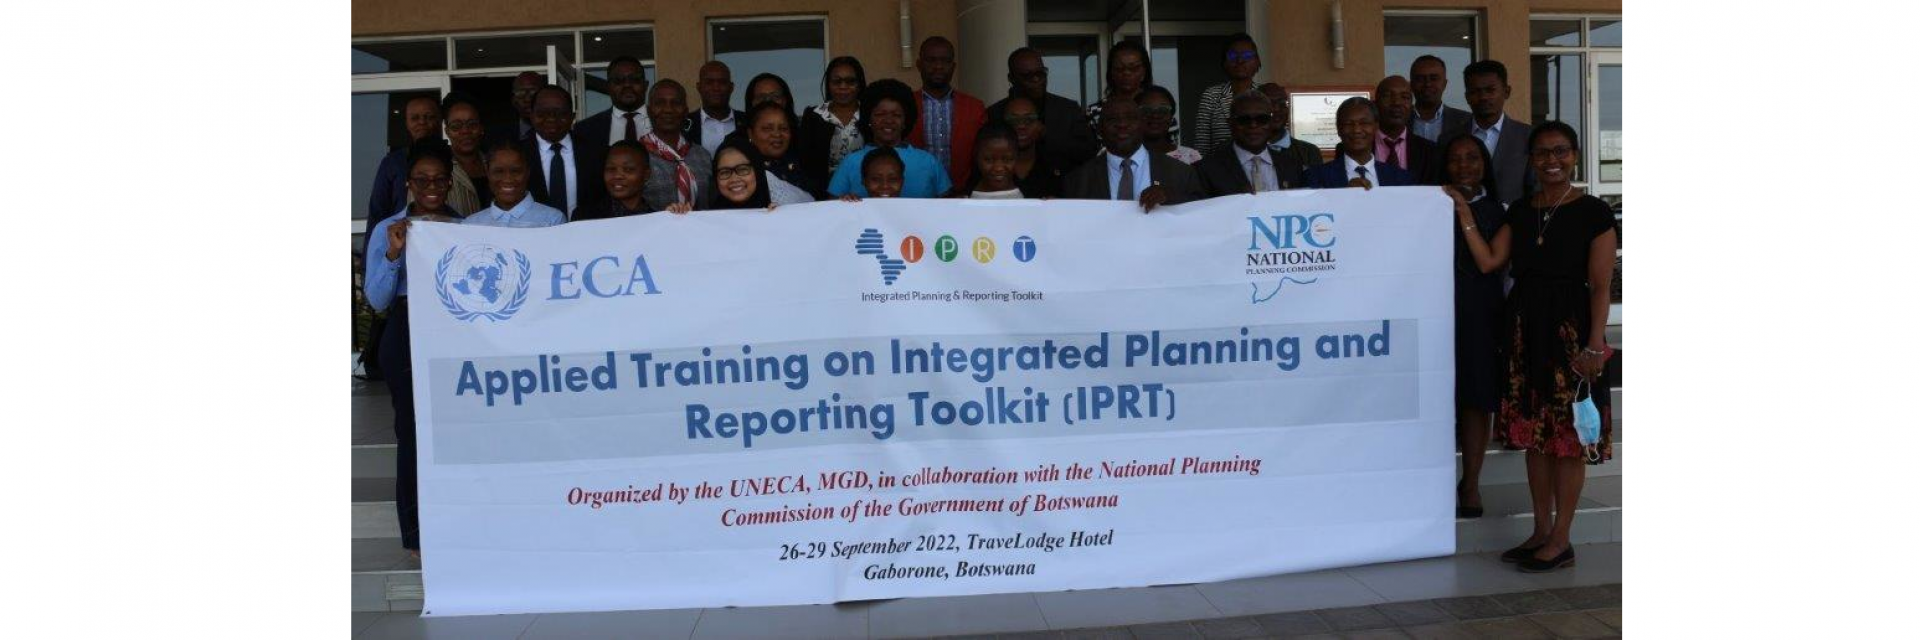 ECA kicks off training on SDG monitoring tool in Botswana 